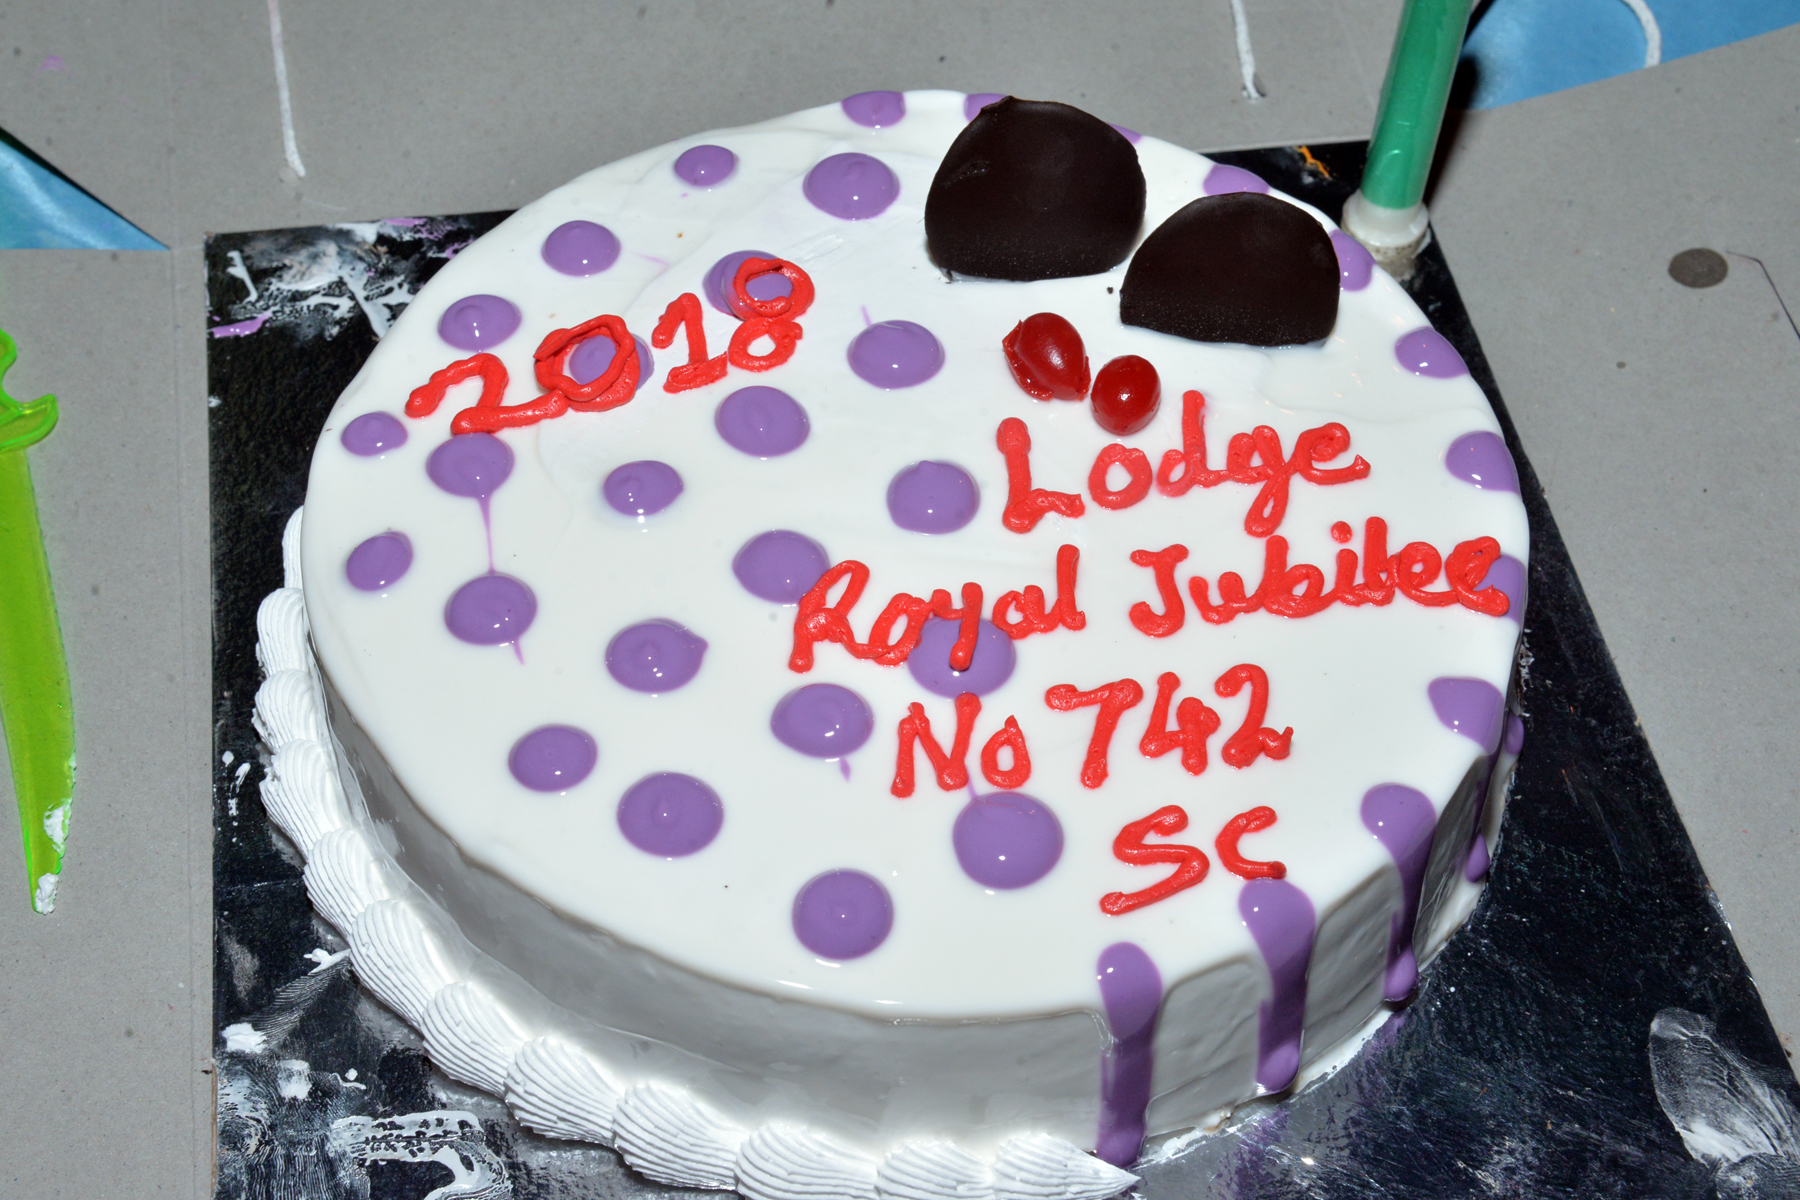 Lodge Royal Jubilee 742 SC